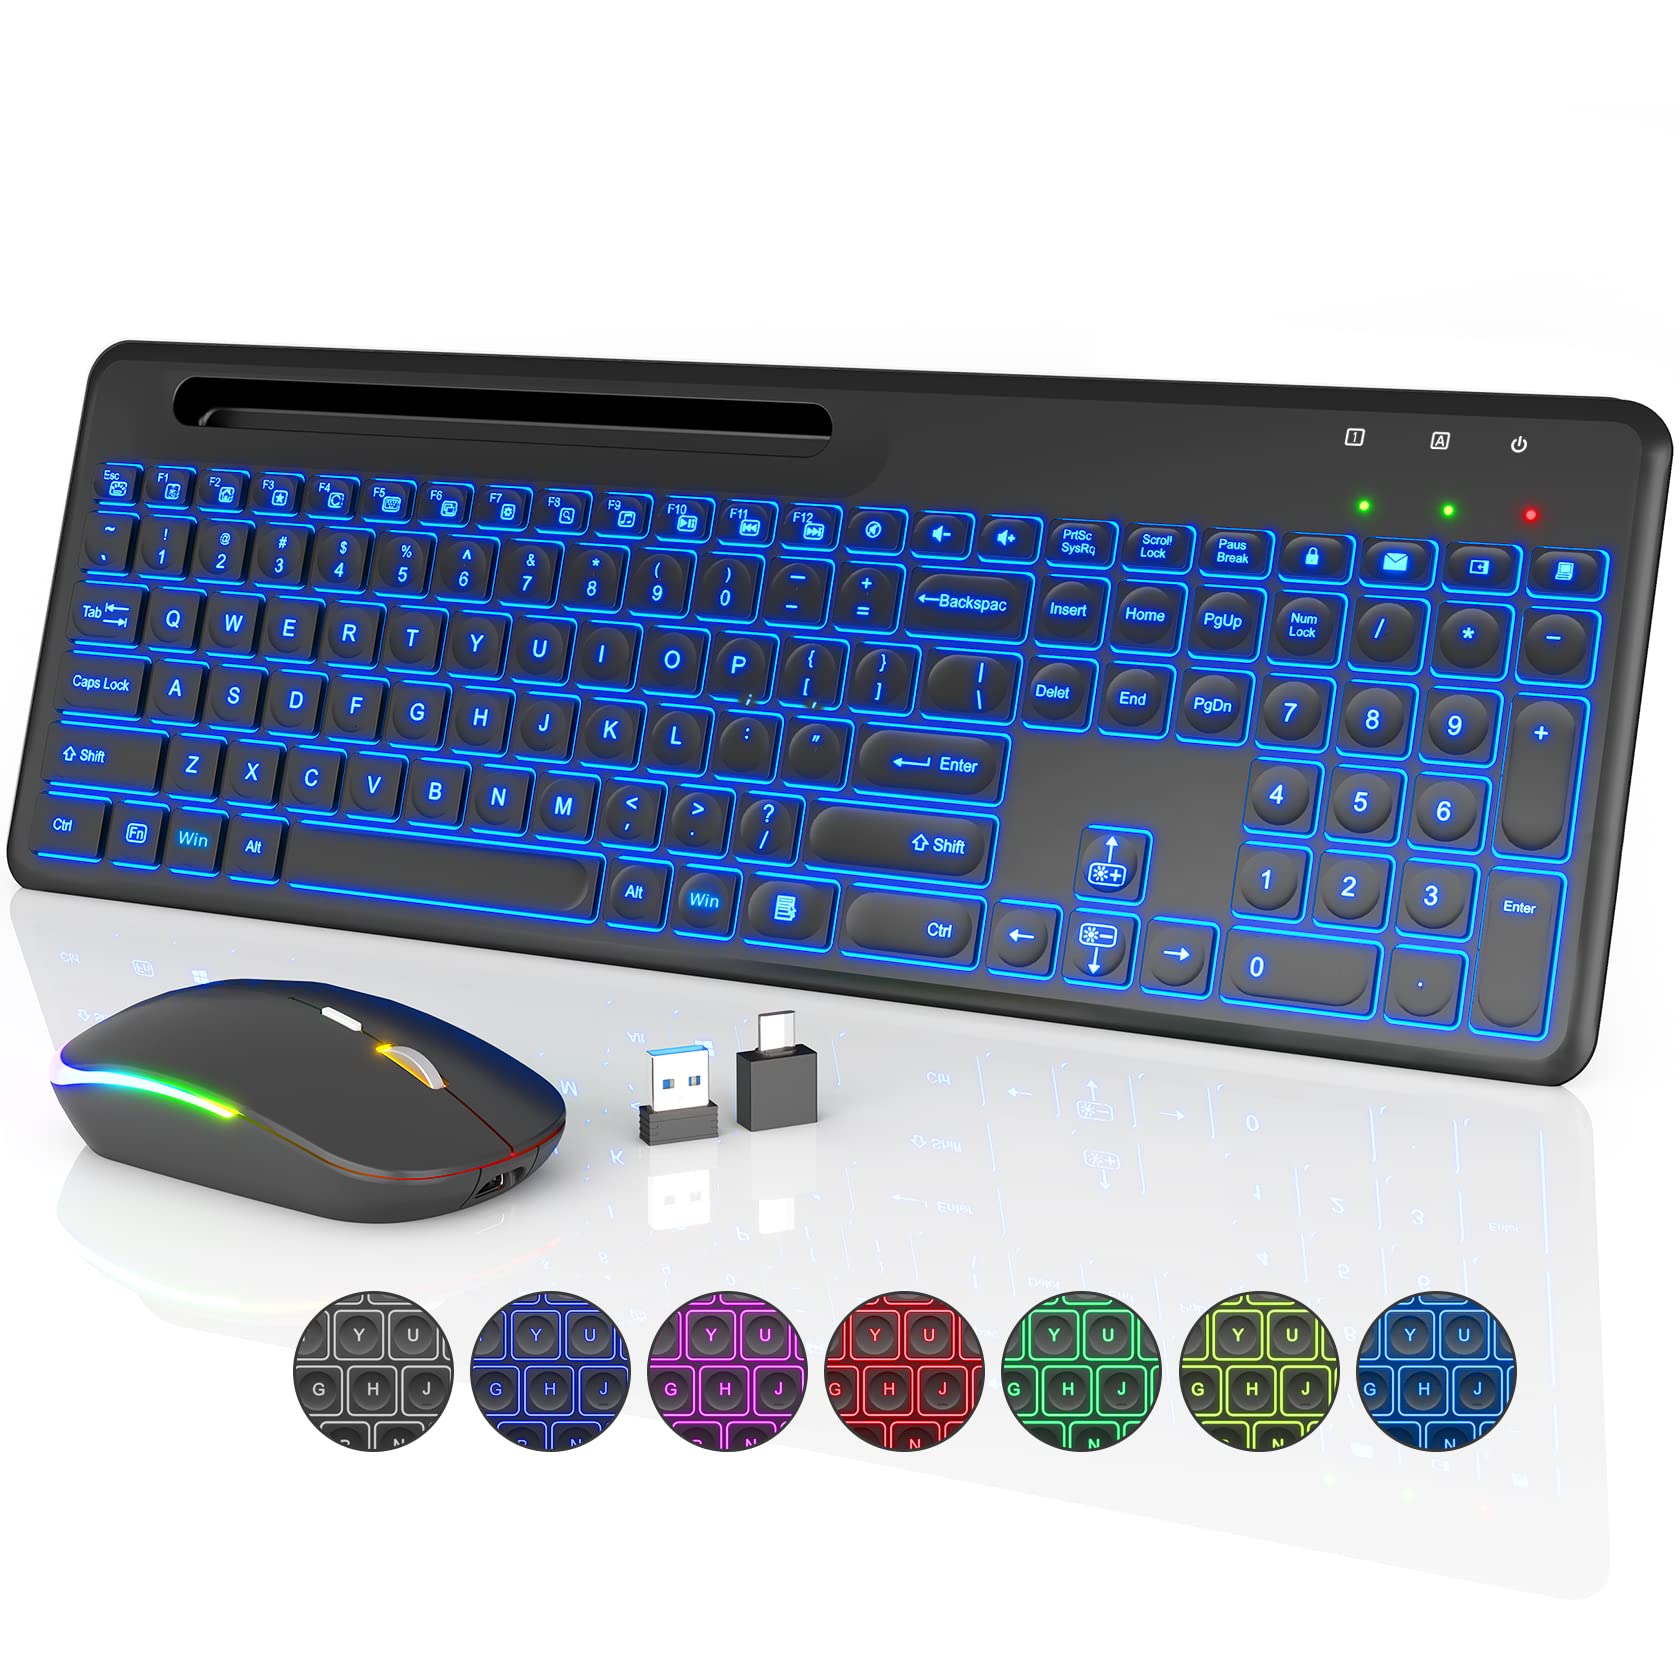 steekpenningen Subtropisch bijstand SABLUTE Wireless Keyboard and Mouse Backlit, Slim Keyboard with Phone